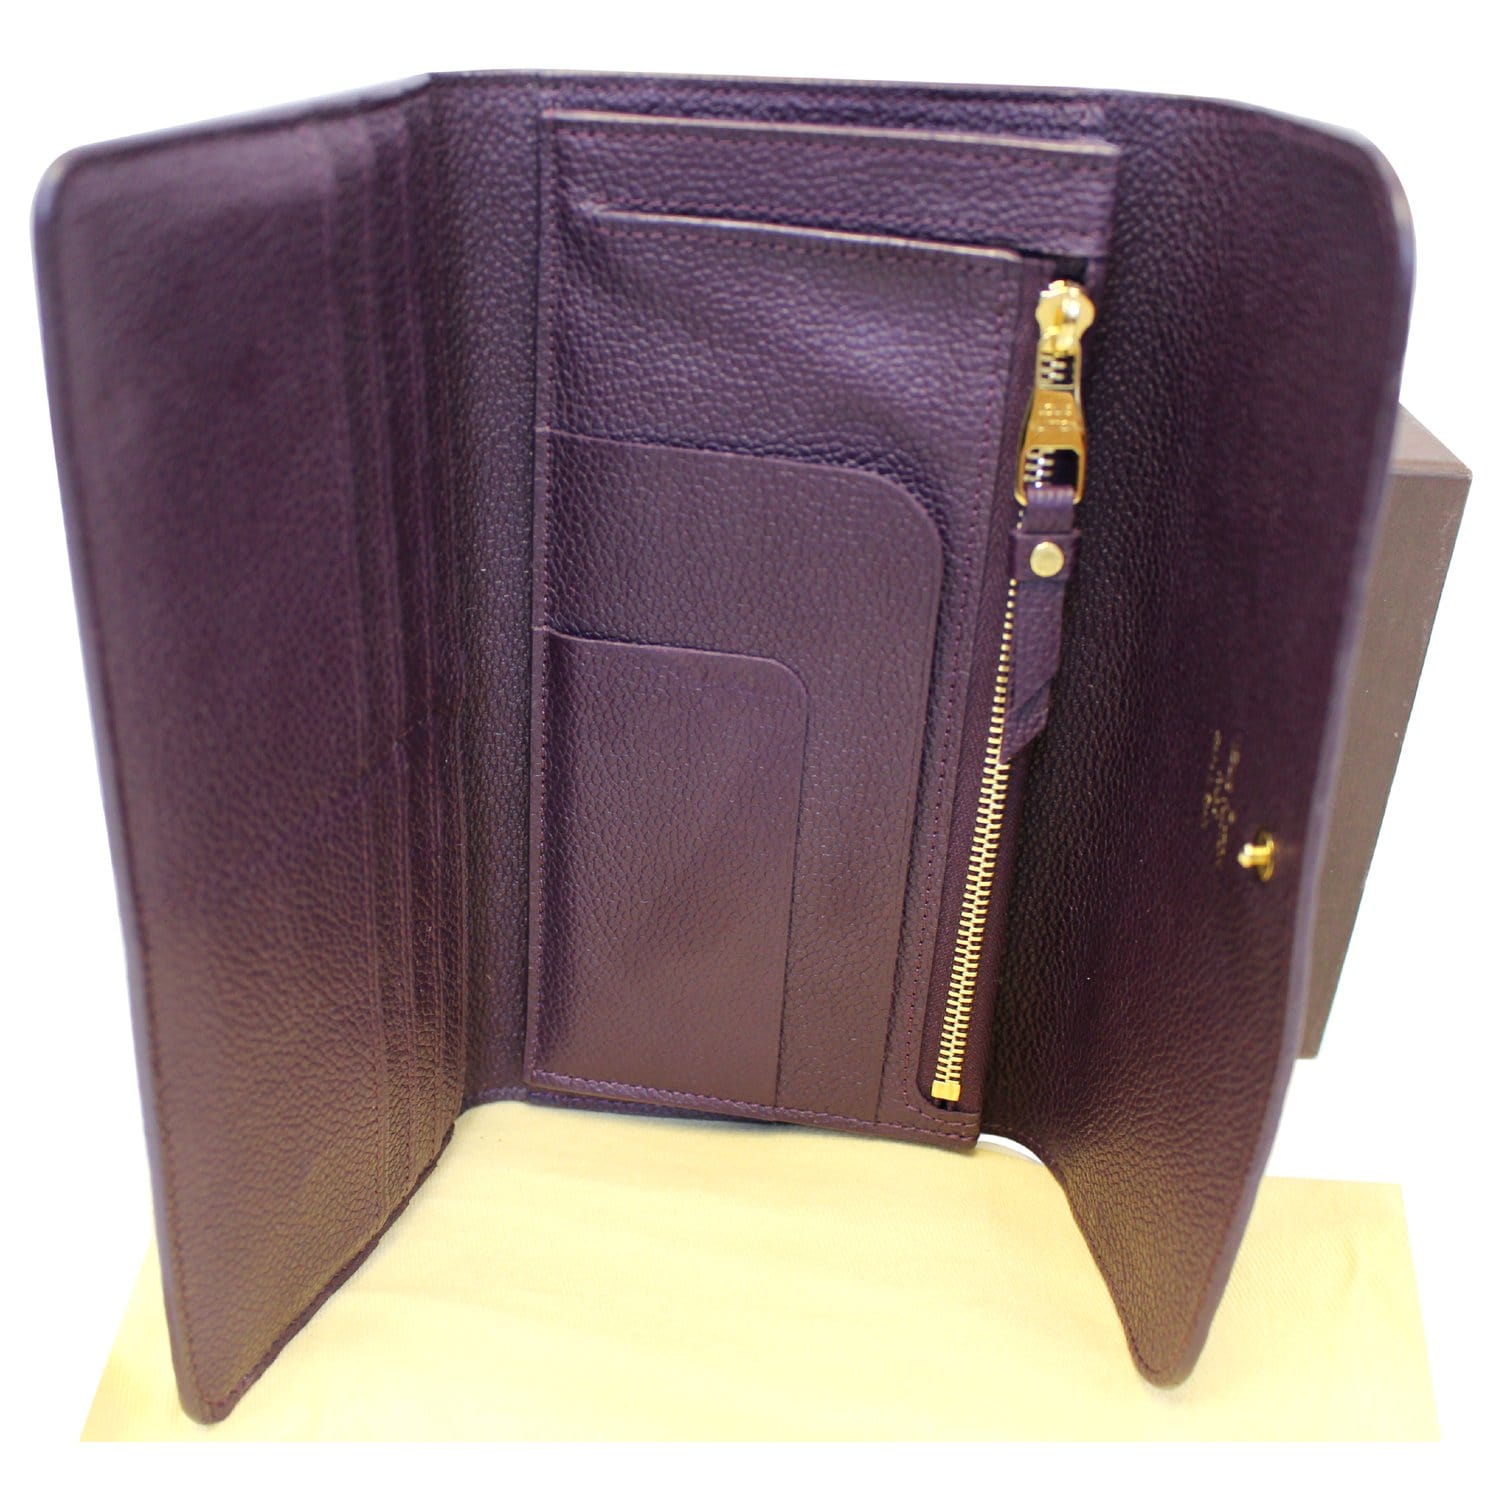 Louis Vuitton Wallet Portefeuille Twist Prunes Purple Long Bifold